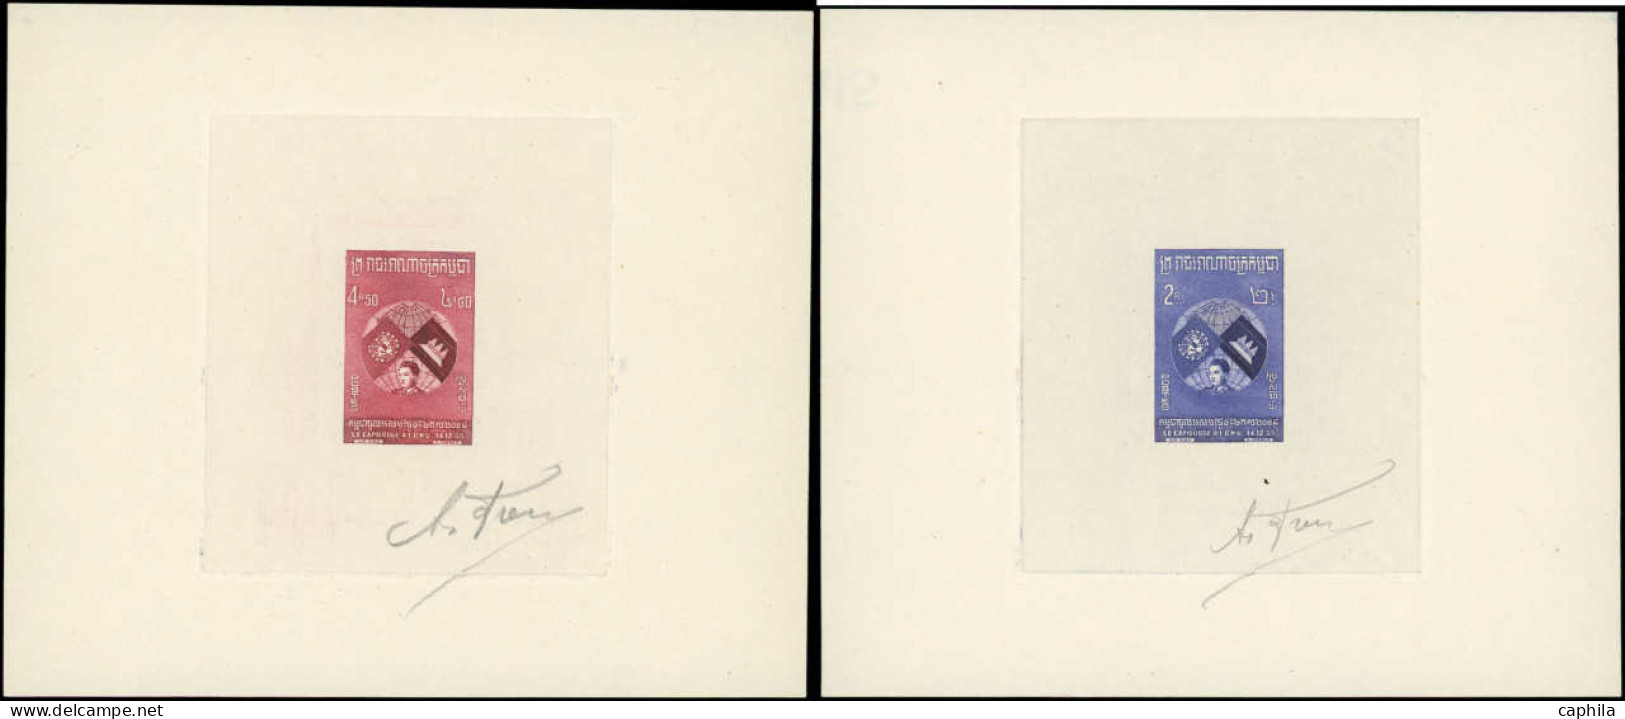 EPA CAMBODGE - Poste - 63 (bleu + 64 (carmin) + 65 (noir), 3 épreuves D'artiste Signées: ONU 1957 - Cambodja